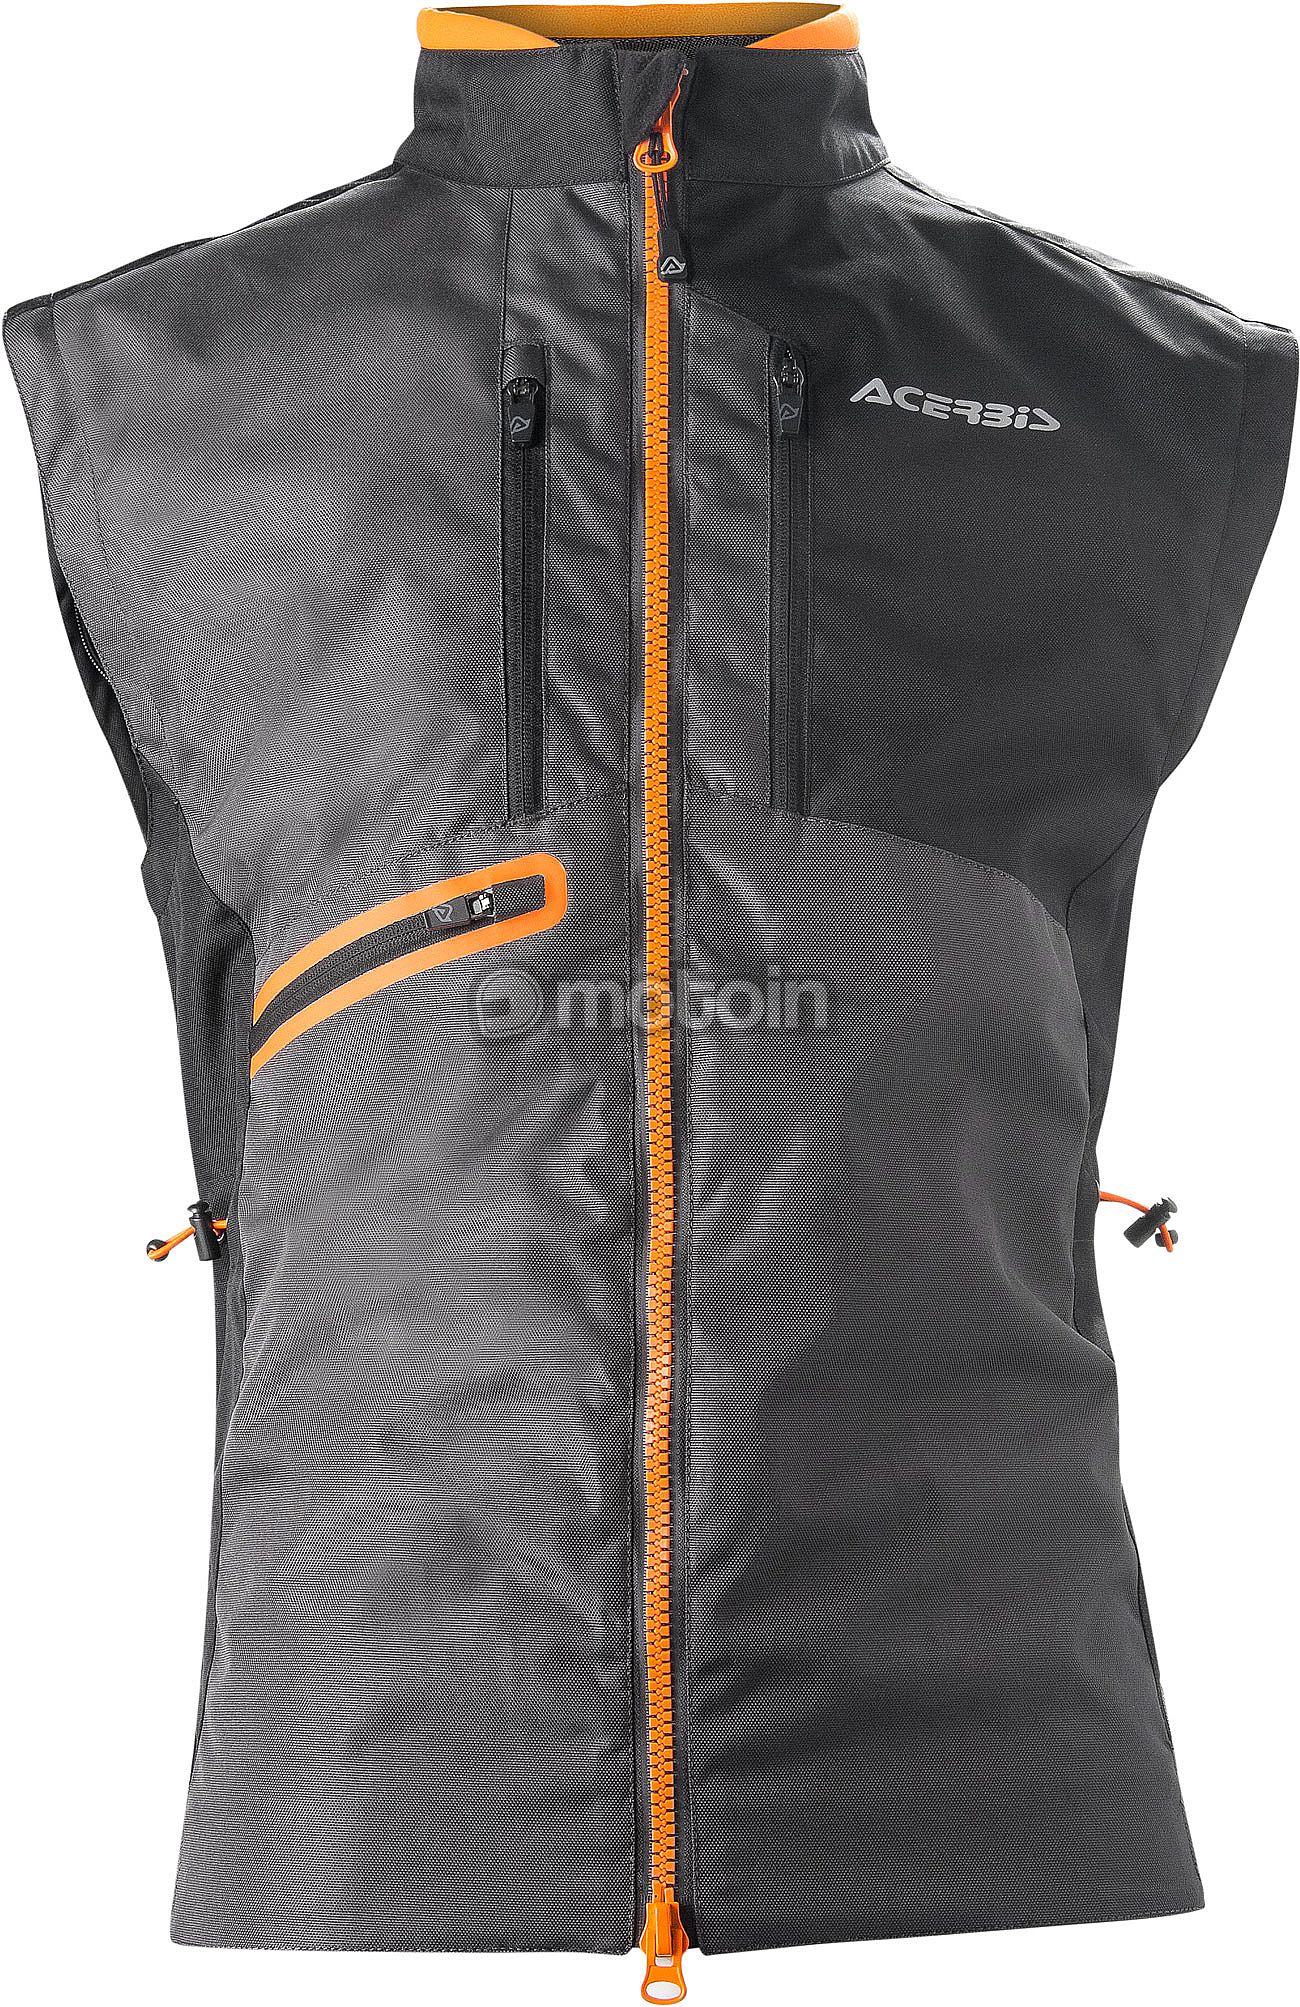 Acerbis One Zip Jacket Enduro Off Road Greenlaning Bike Grey Orange 